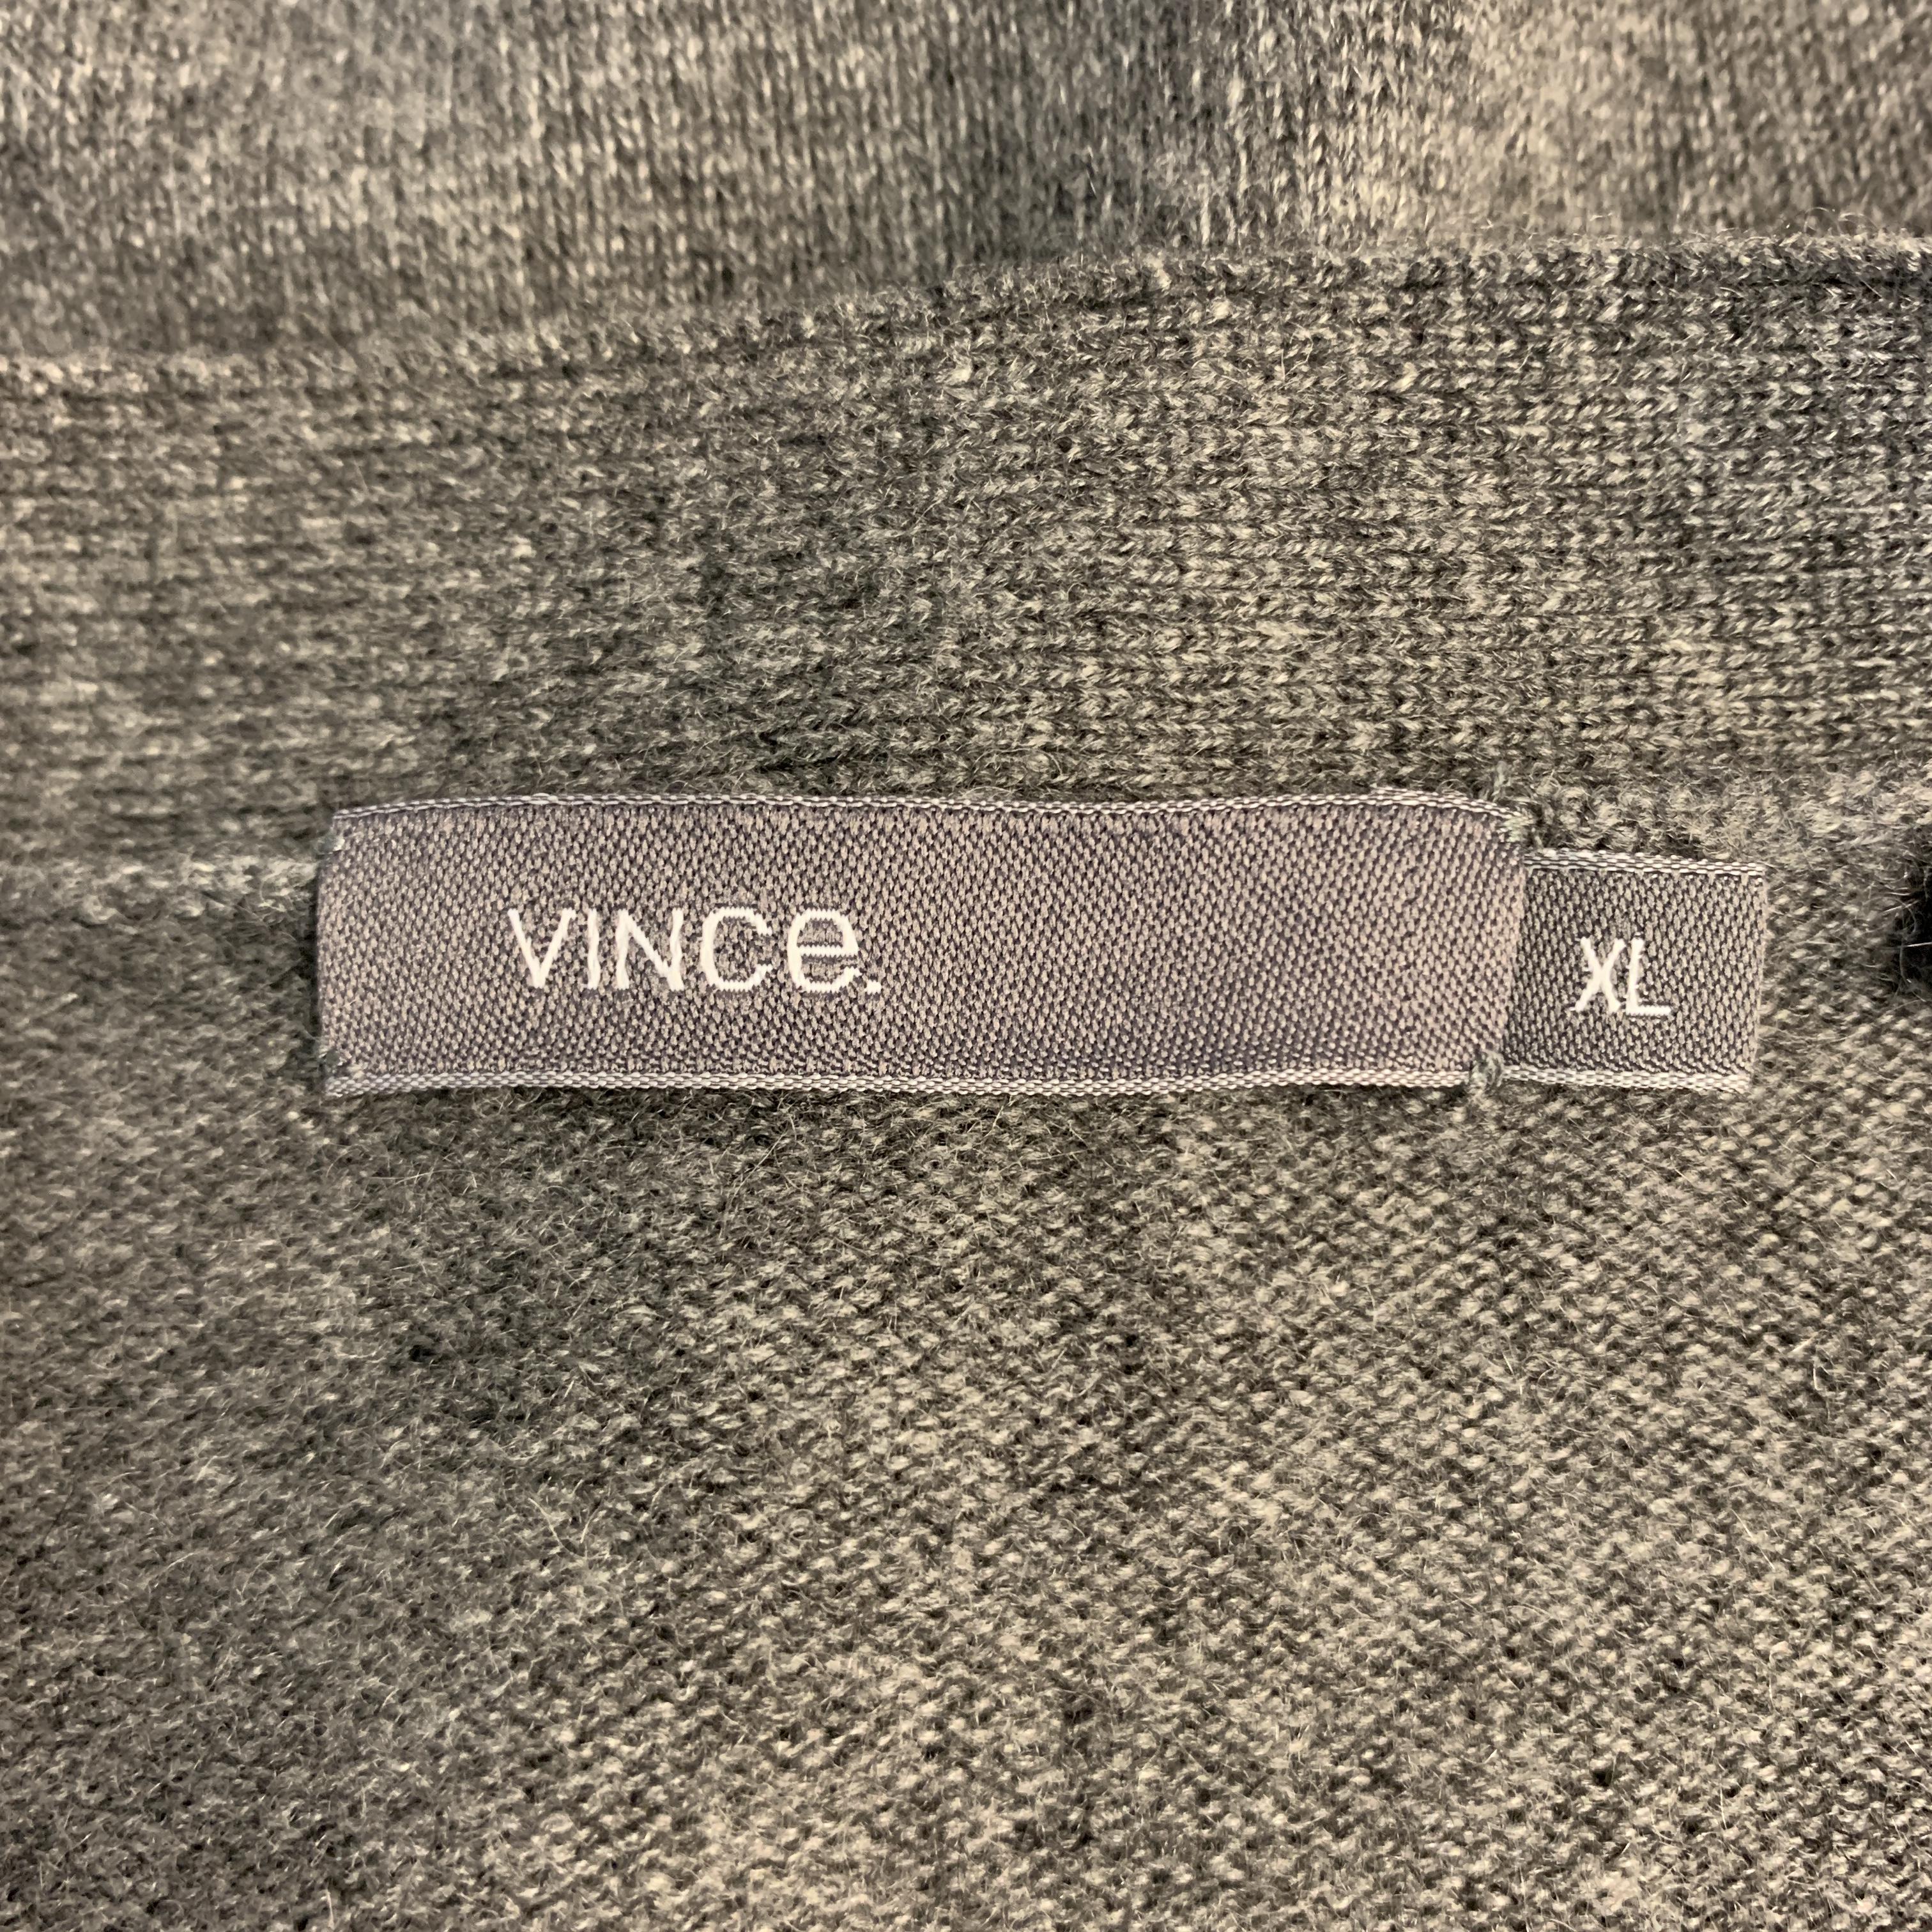 Men's VINCE Size XL Black & Grey Ombre Cashmere V-Neck Cardigan Sweater